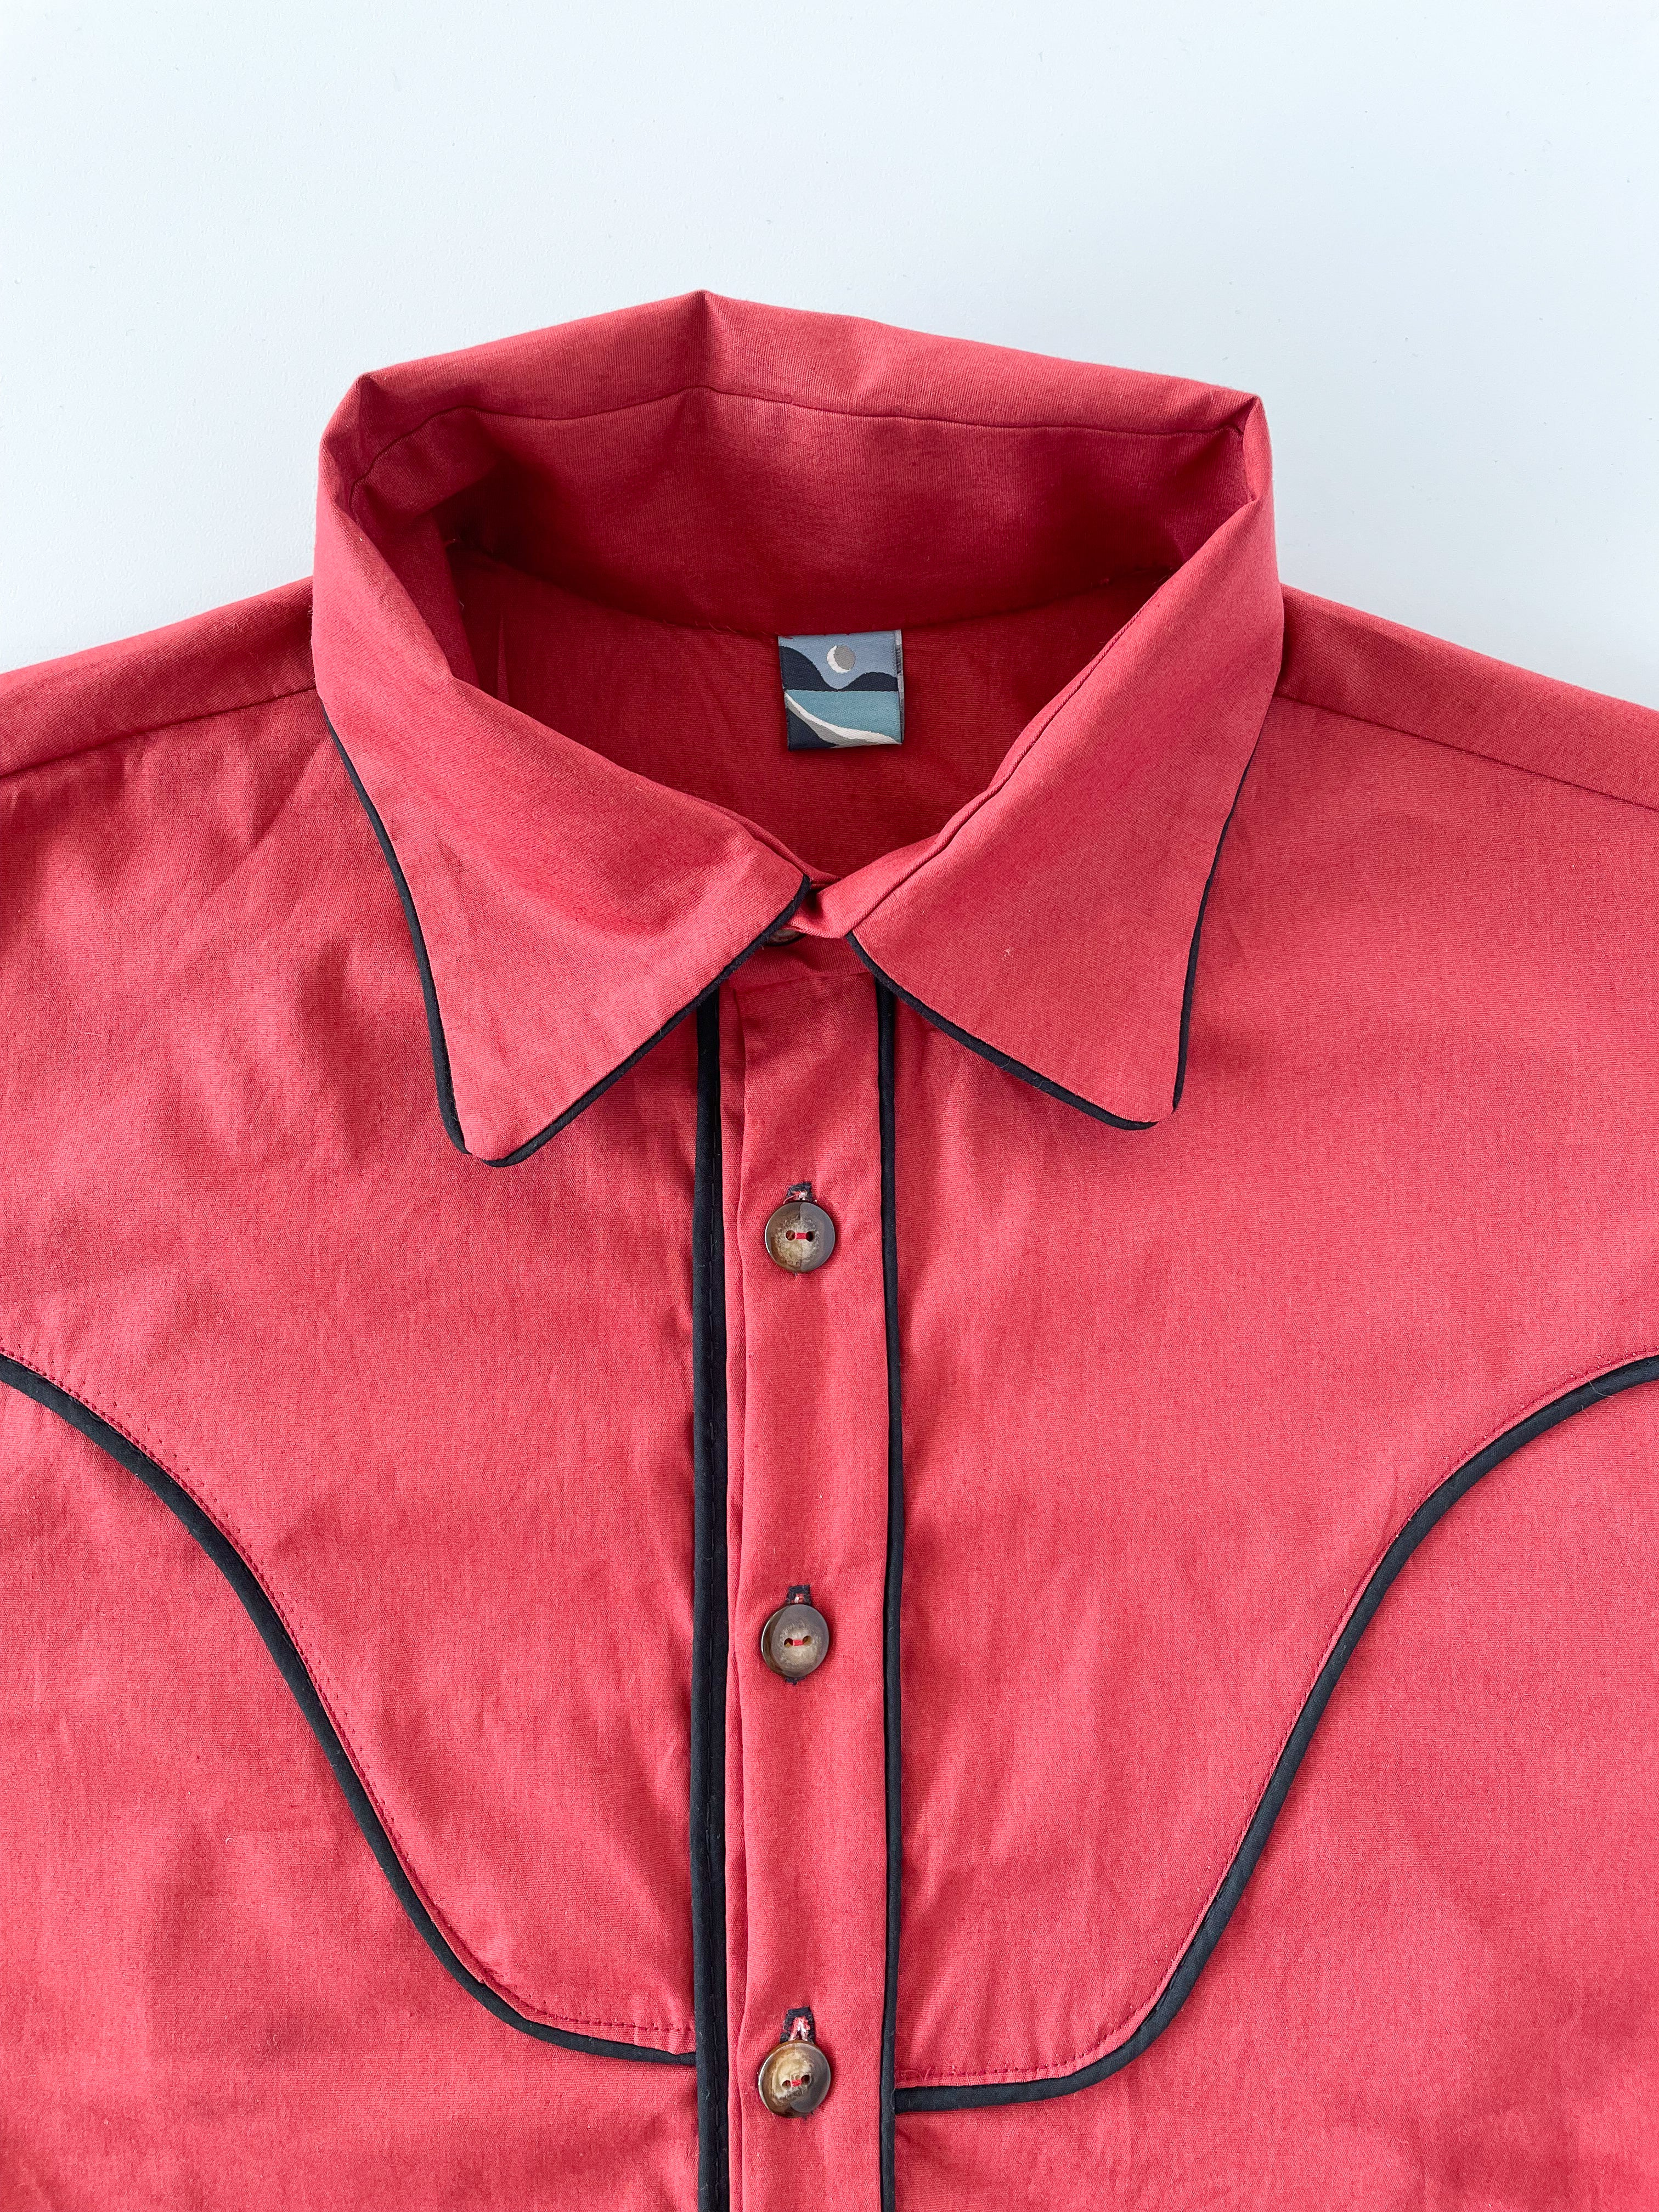 core-collection-lightweight-silky-cotton-poplin-brick-red-core-fabrics-button-up.jpg